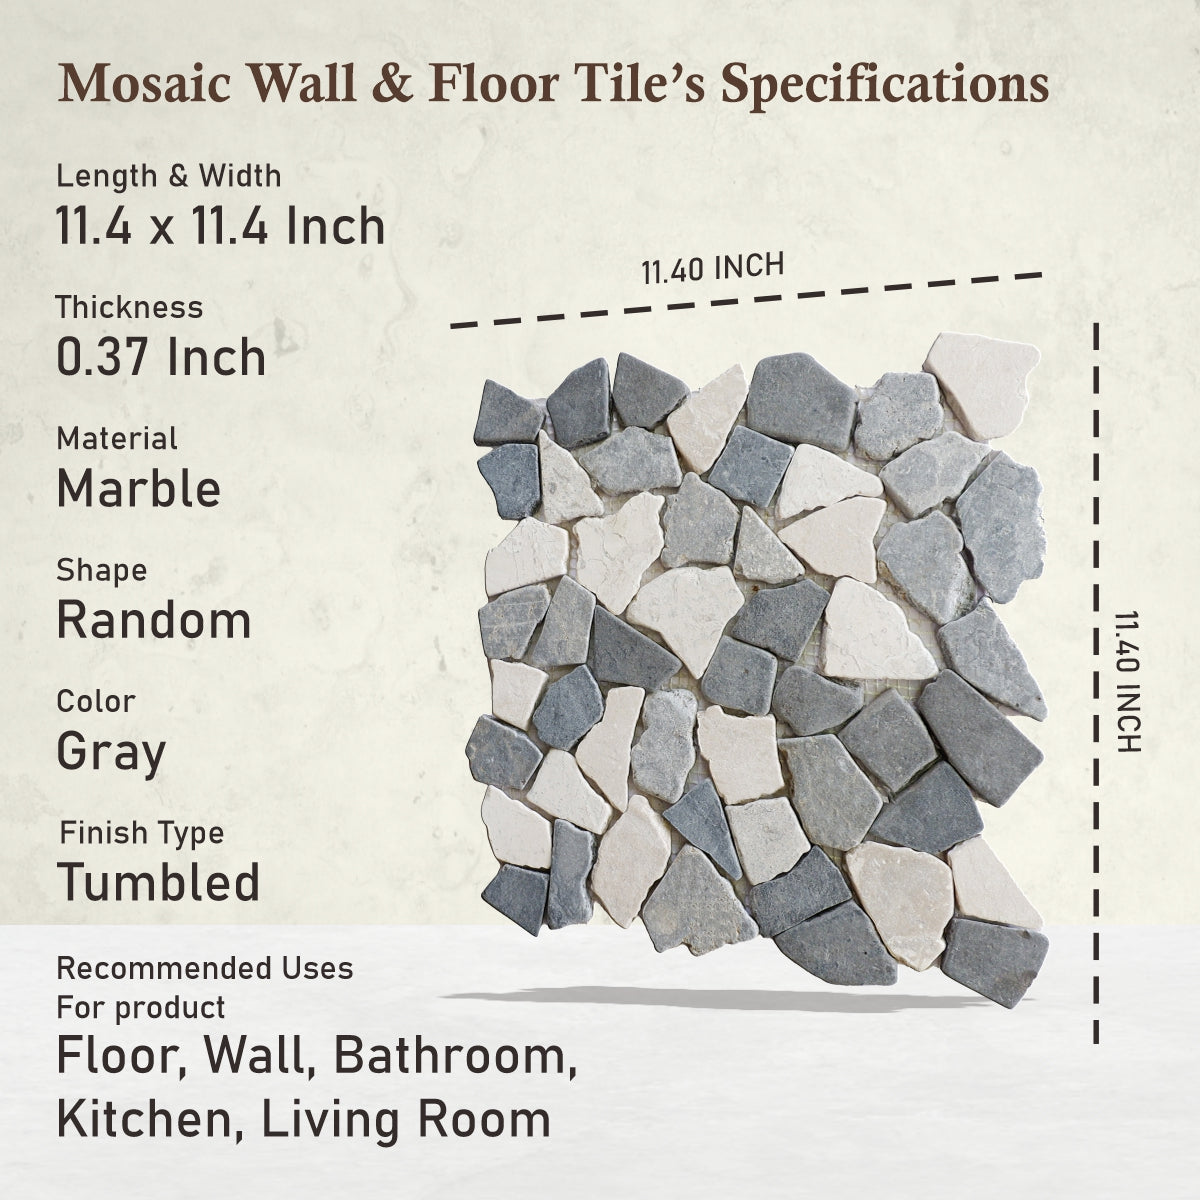 Irregular Stone Mosaic Tile, Awan Random Mosaic Wall Tile